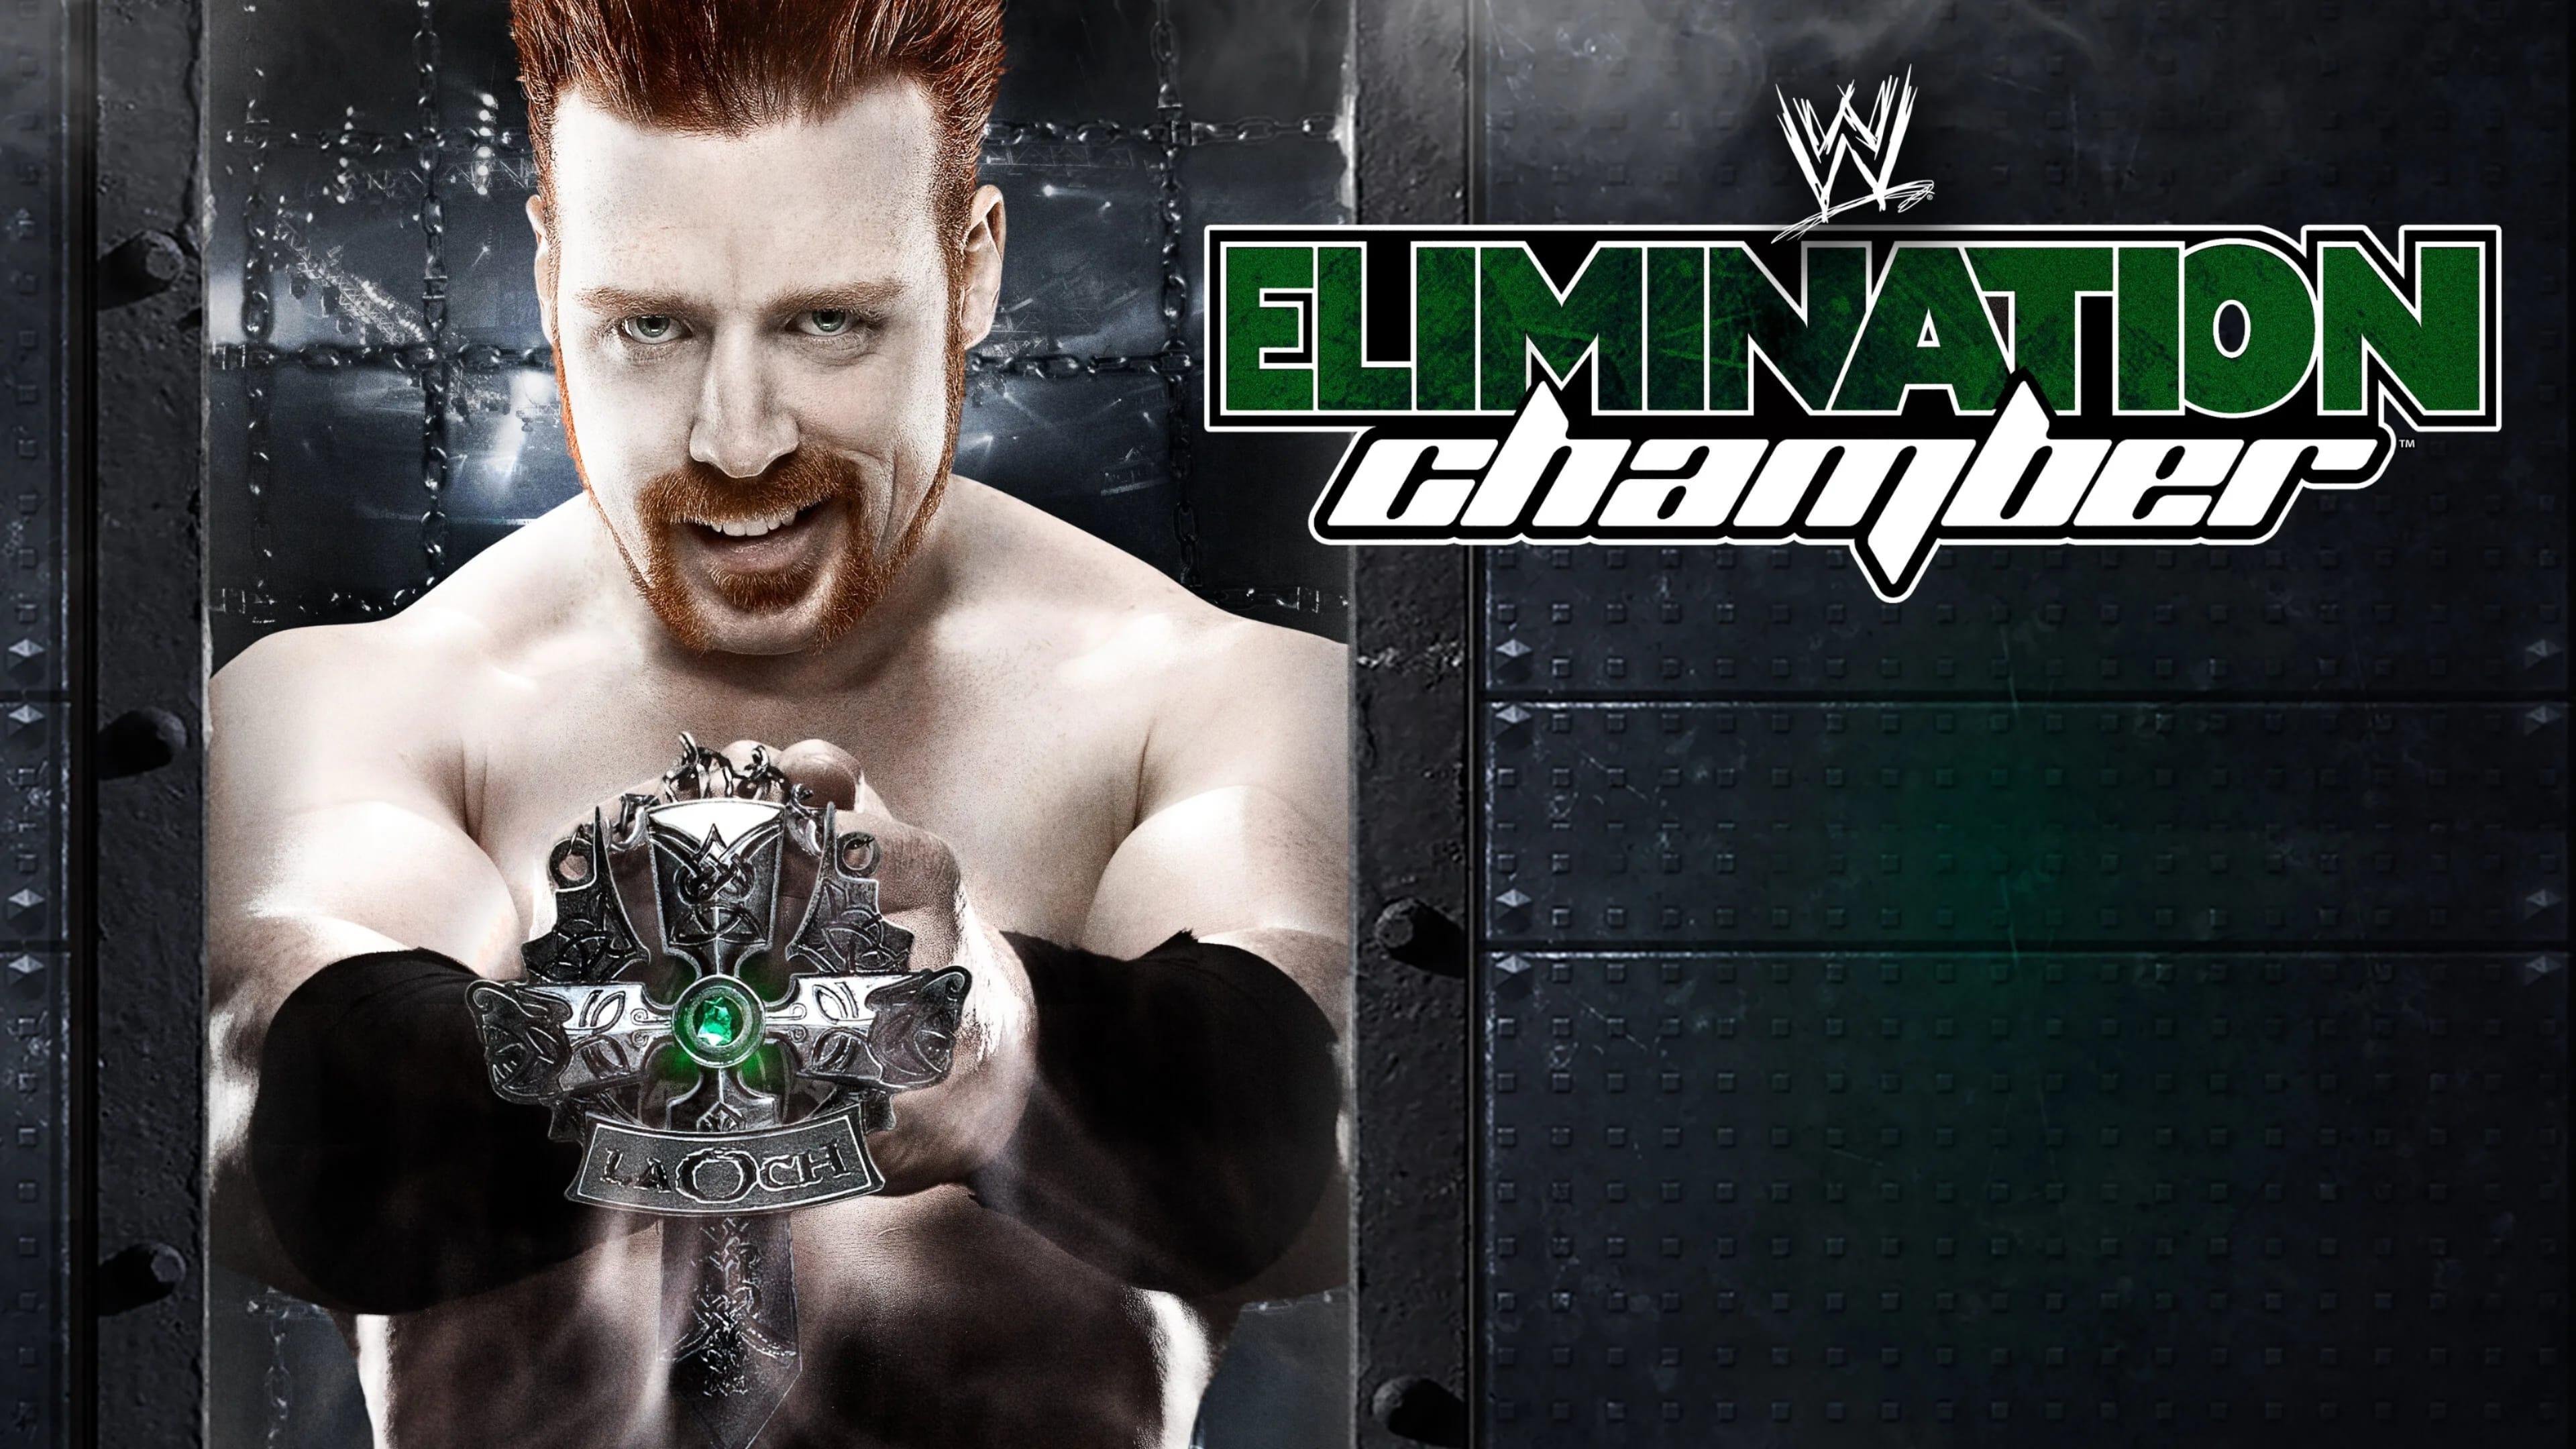 WWE Elimination Chamber 2012 backdrop